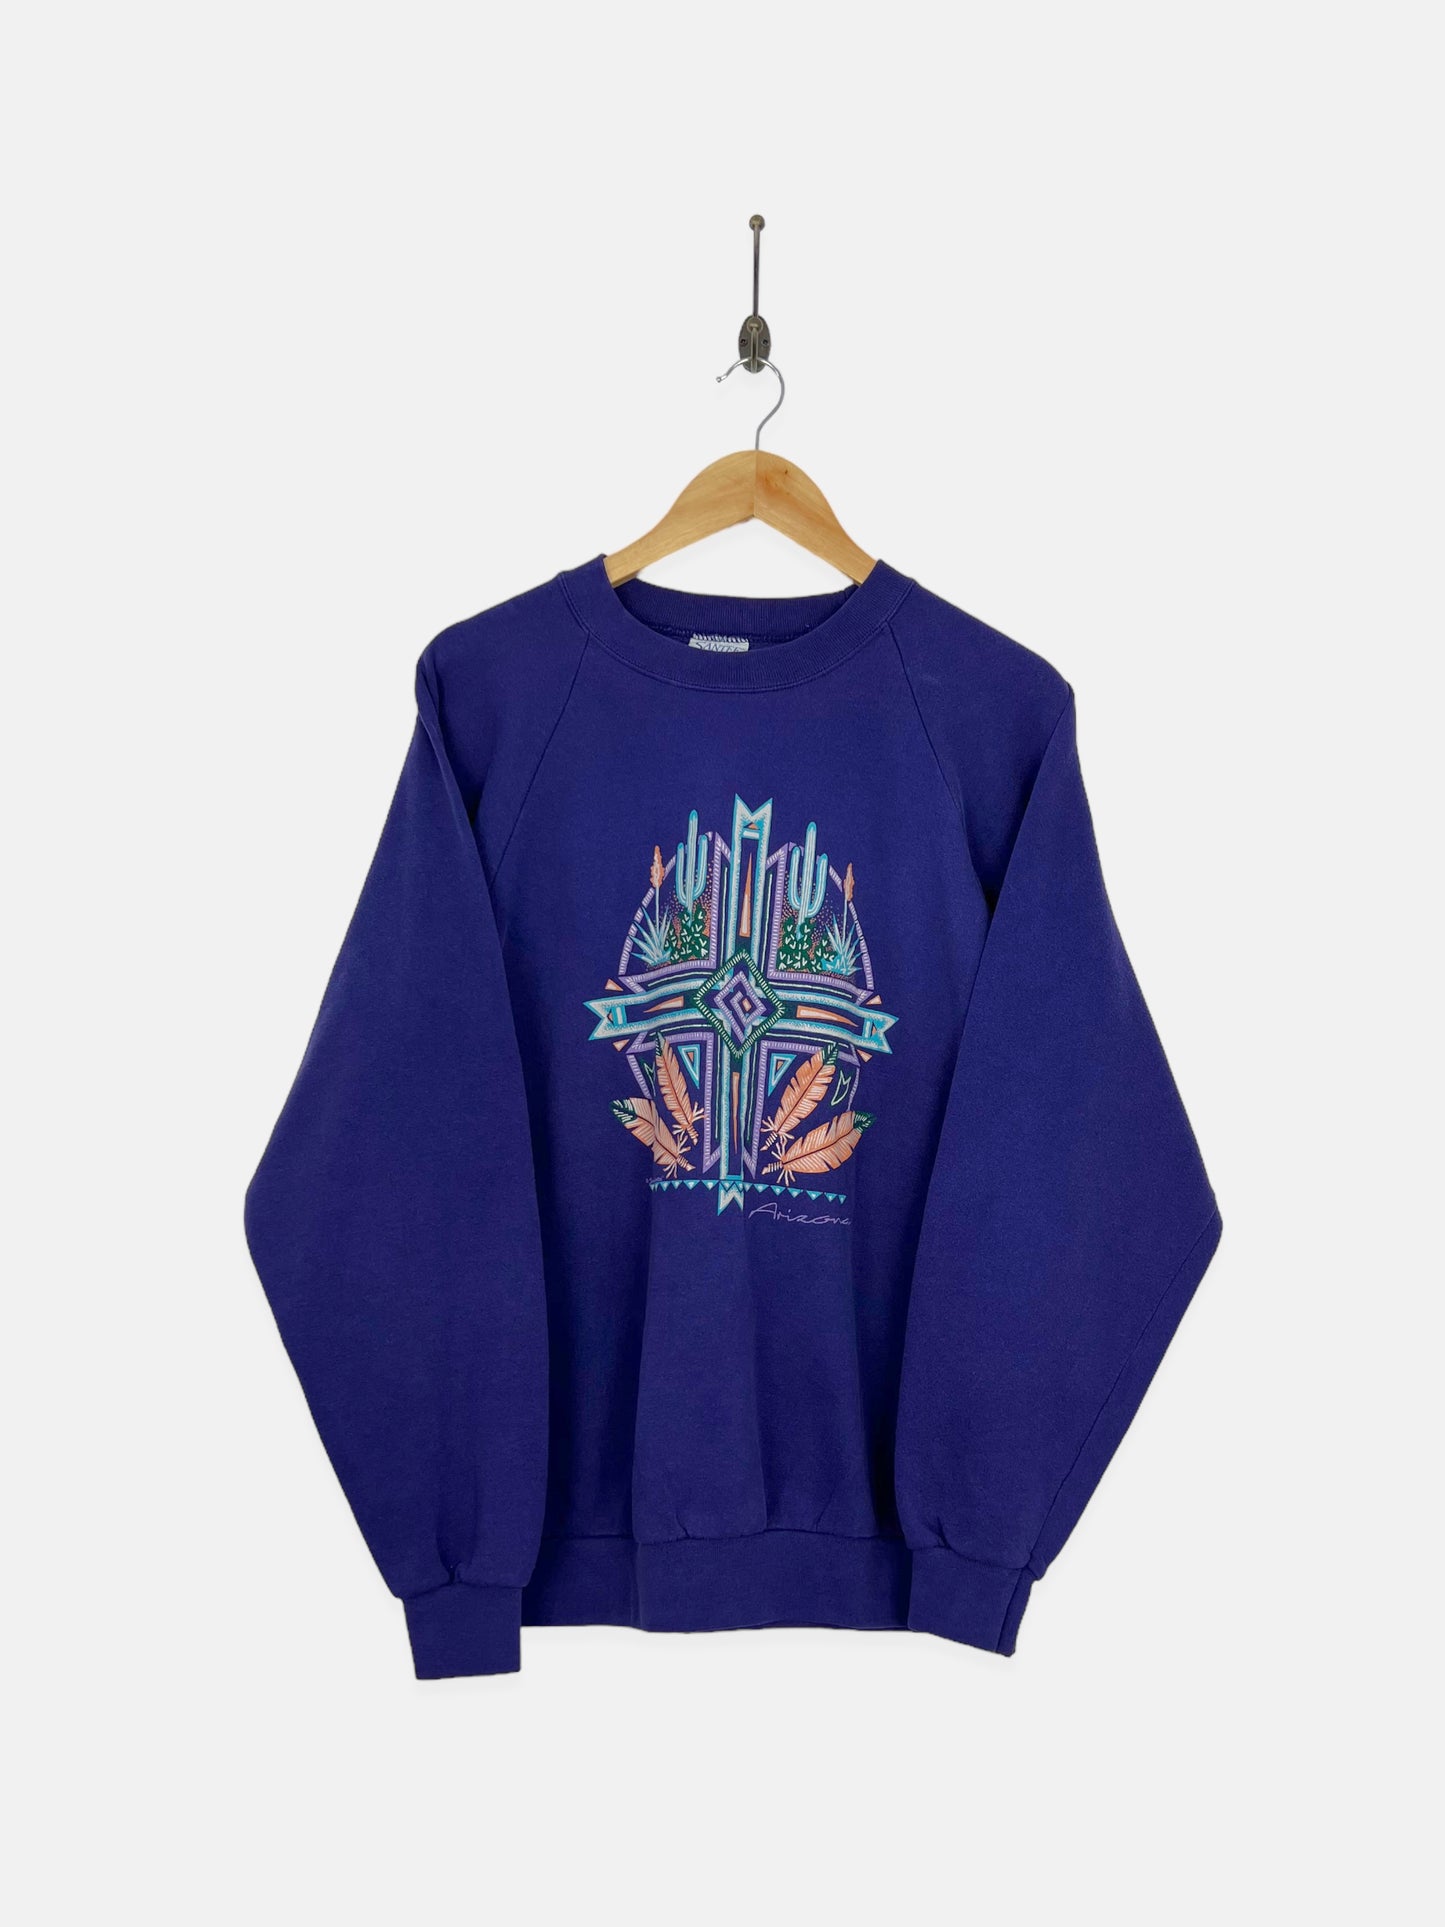 90's Arizona USA Made Vintage Sweatshirt Size 12